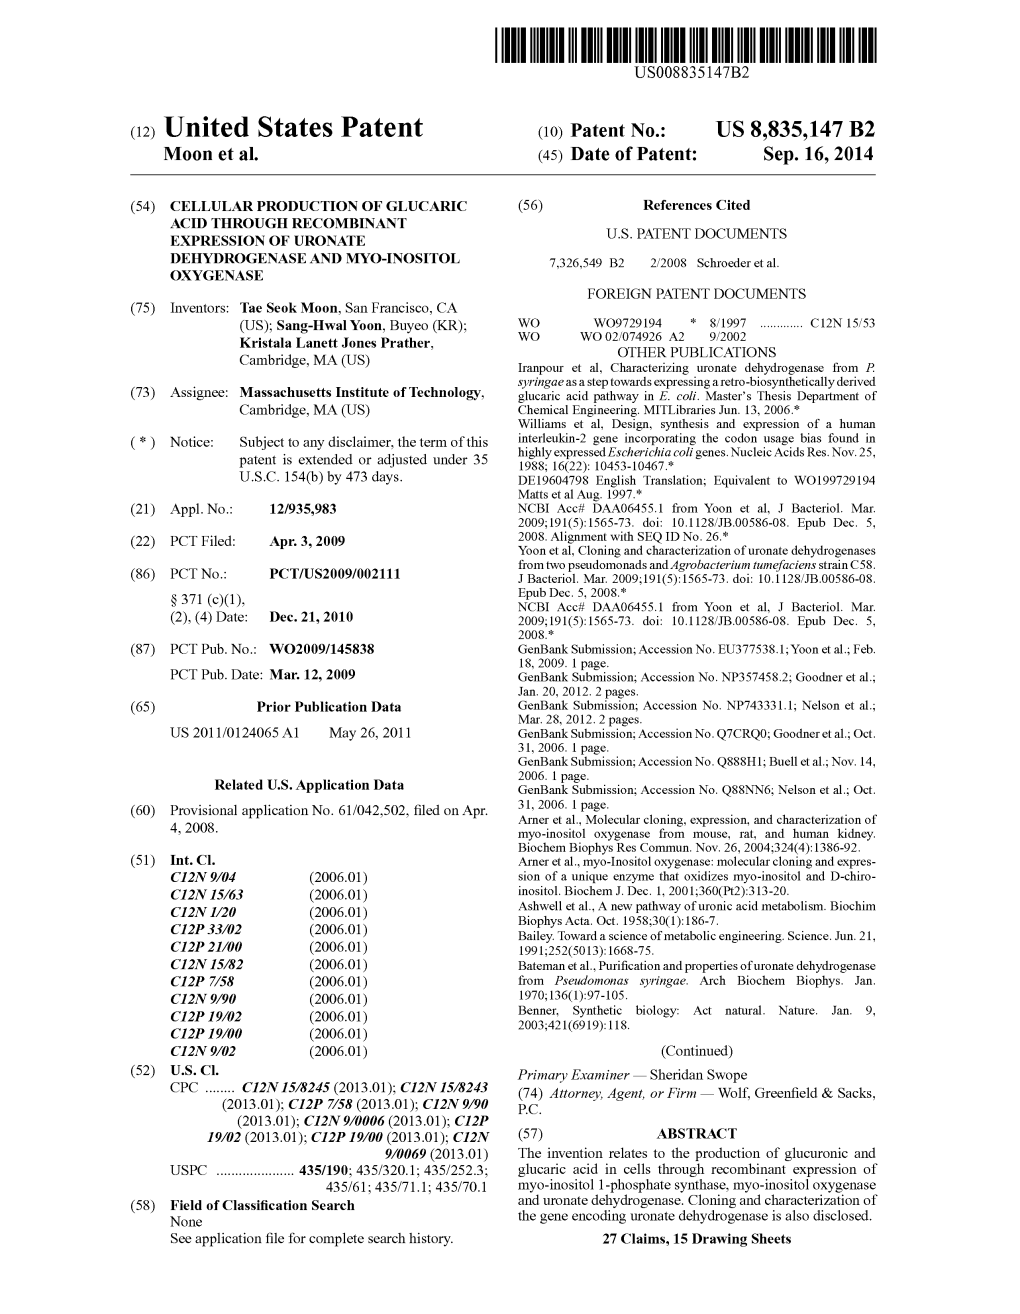 (12) United States Patent (10) Patent No.: US 8,835,147 B2 M00n Et Al